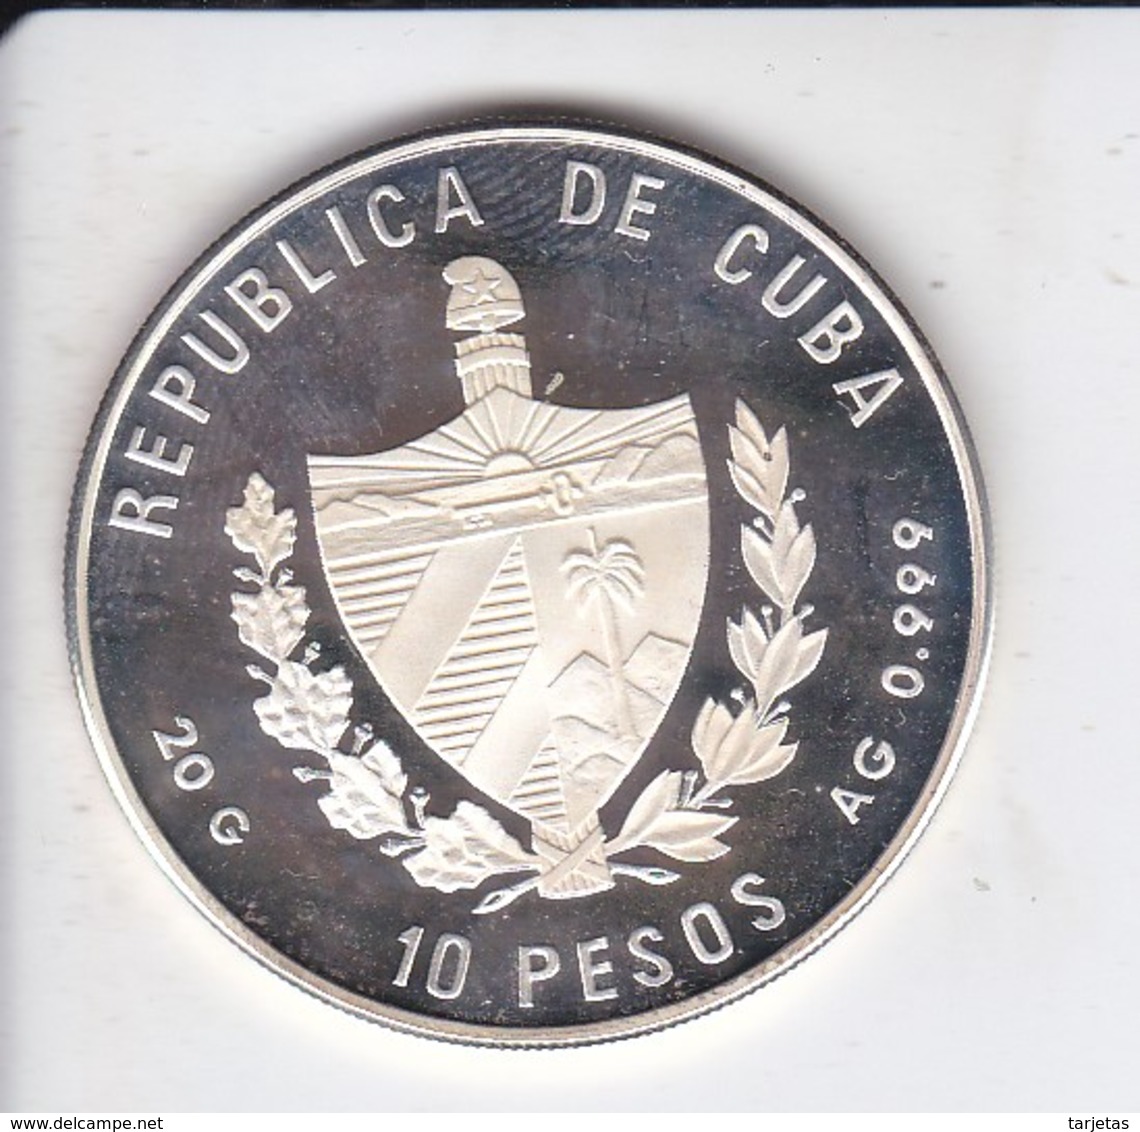 MONEDA DE PLATA DE CUBA DE 10 PESOS AÑO 1994 NAO VICTORIA (SILVER-ARGENT) BARCO-SHIP - Cuba